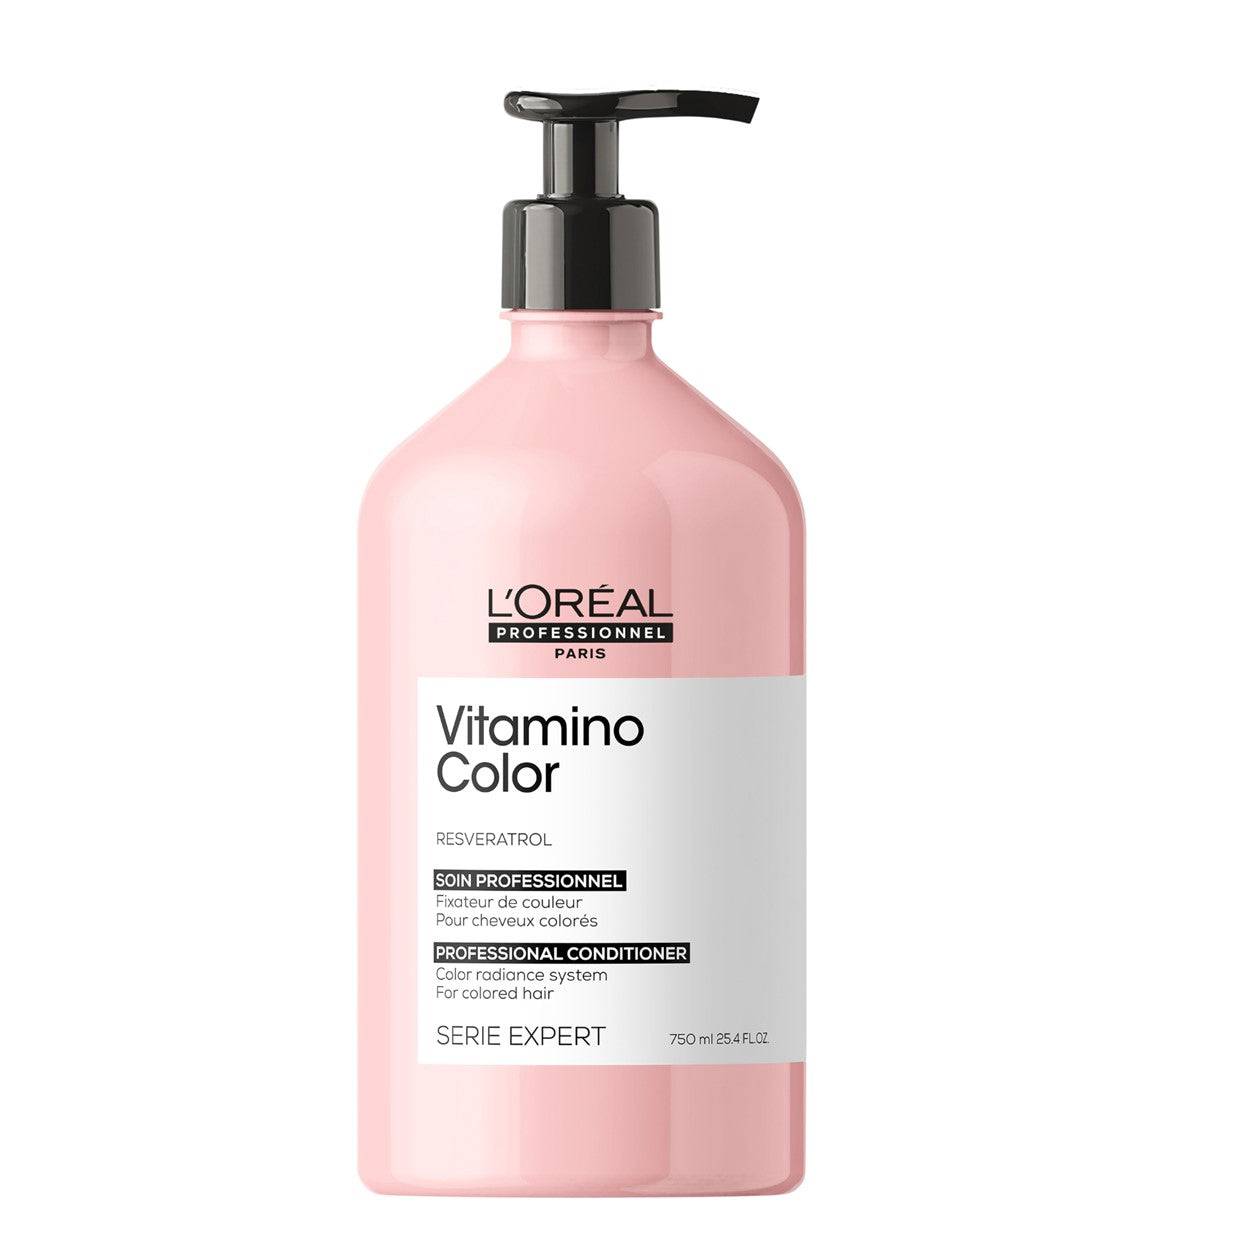 L'oreal Professionel Vitamino Resveratrol Color Conditioner 750ml - On Line Hair Depot